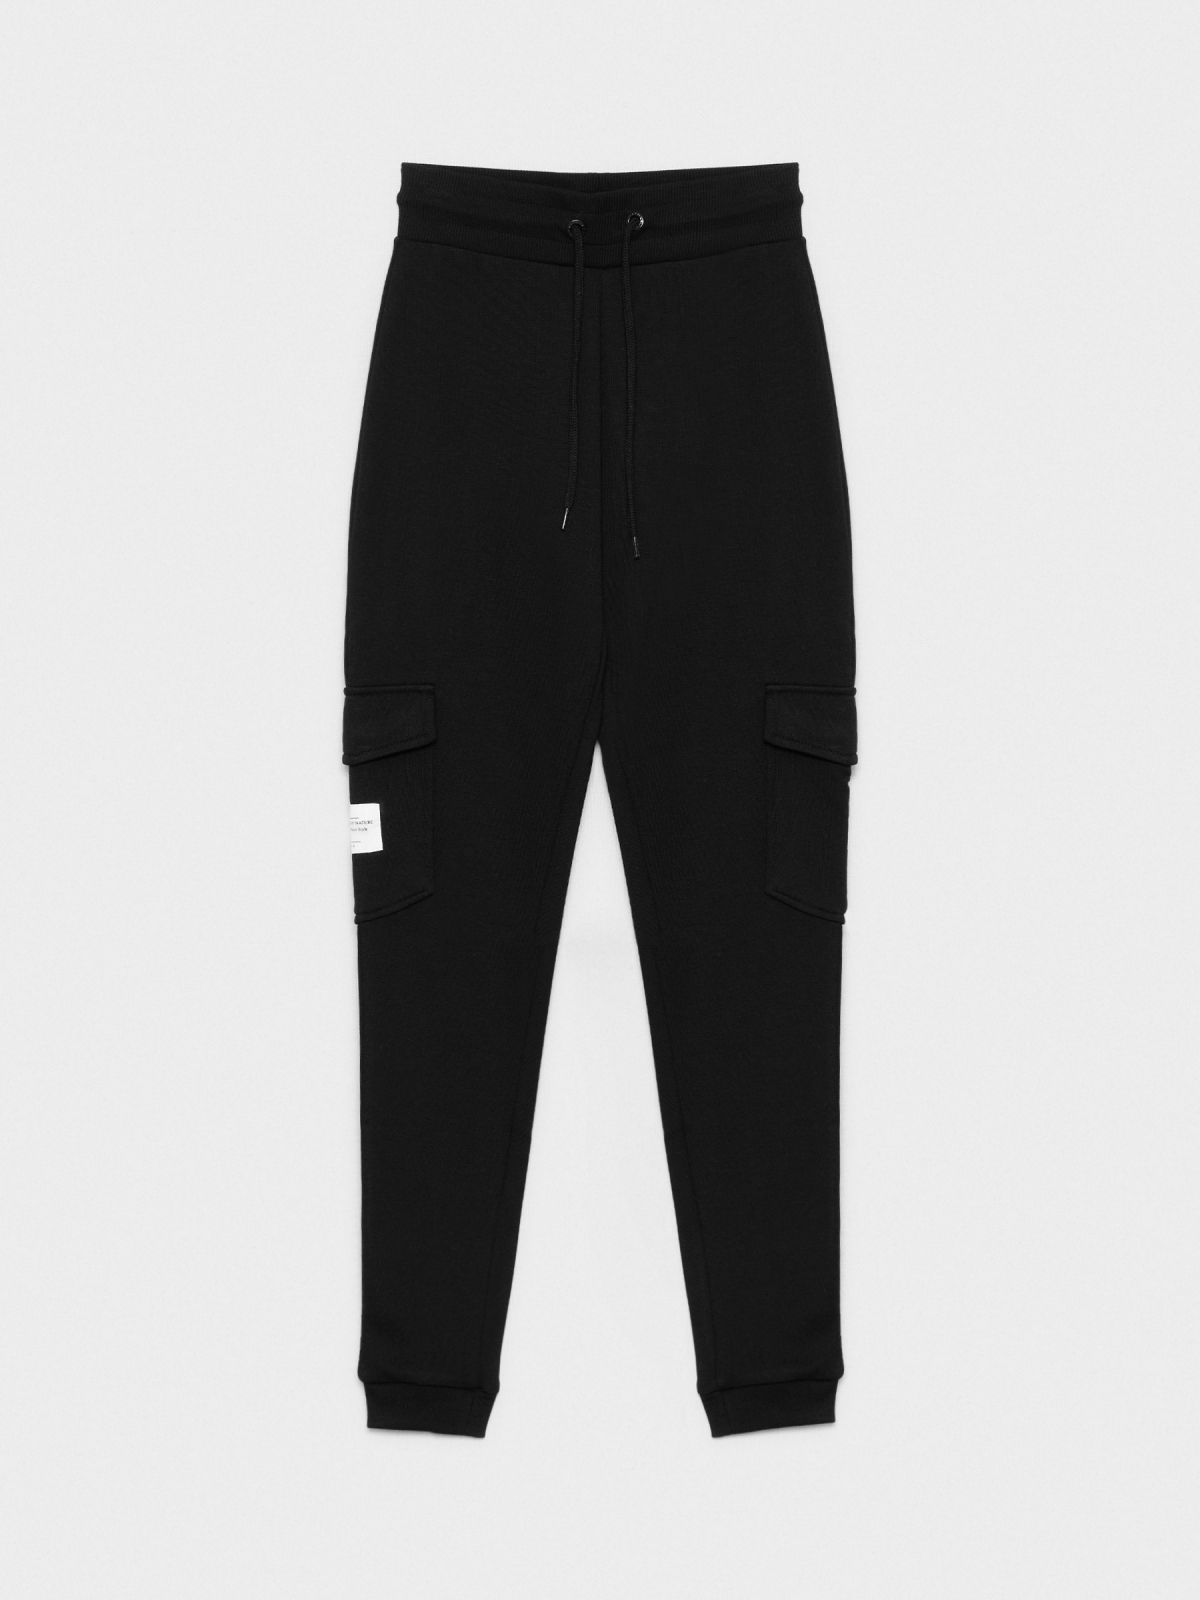  Black jogger pants with pockets black